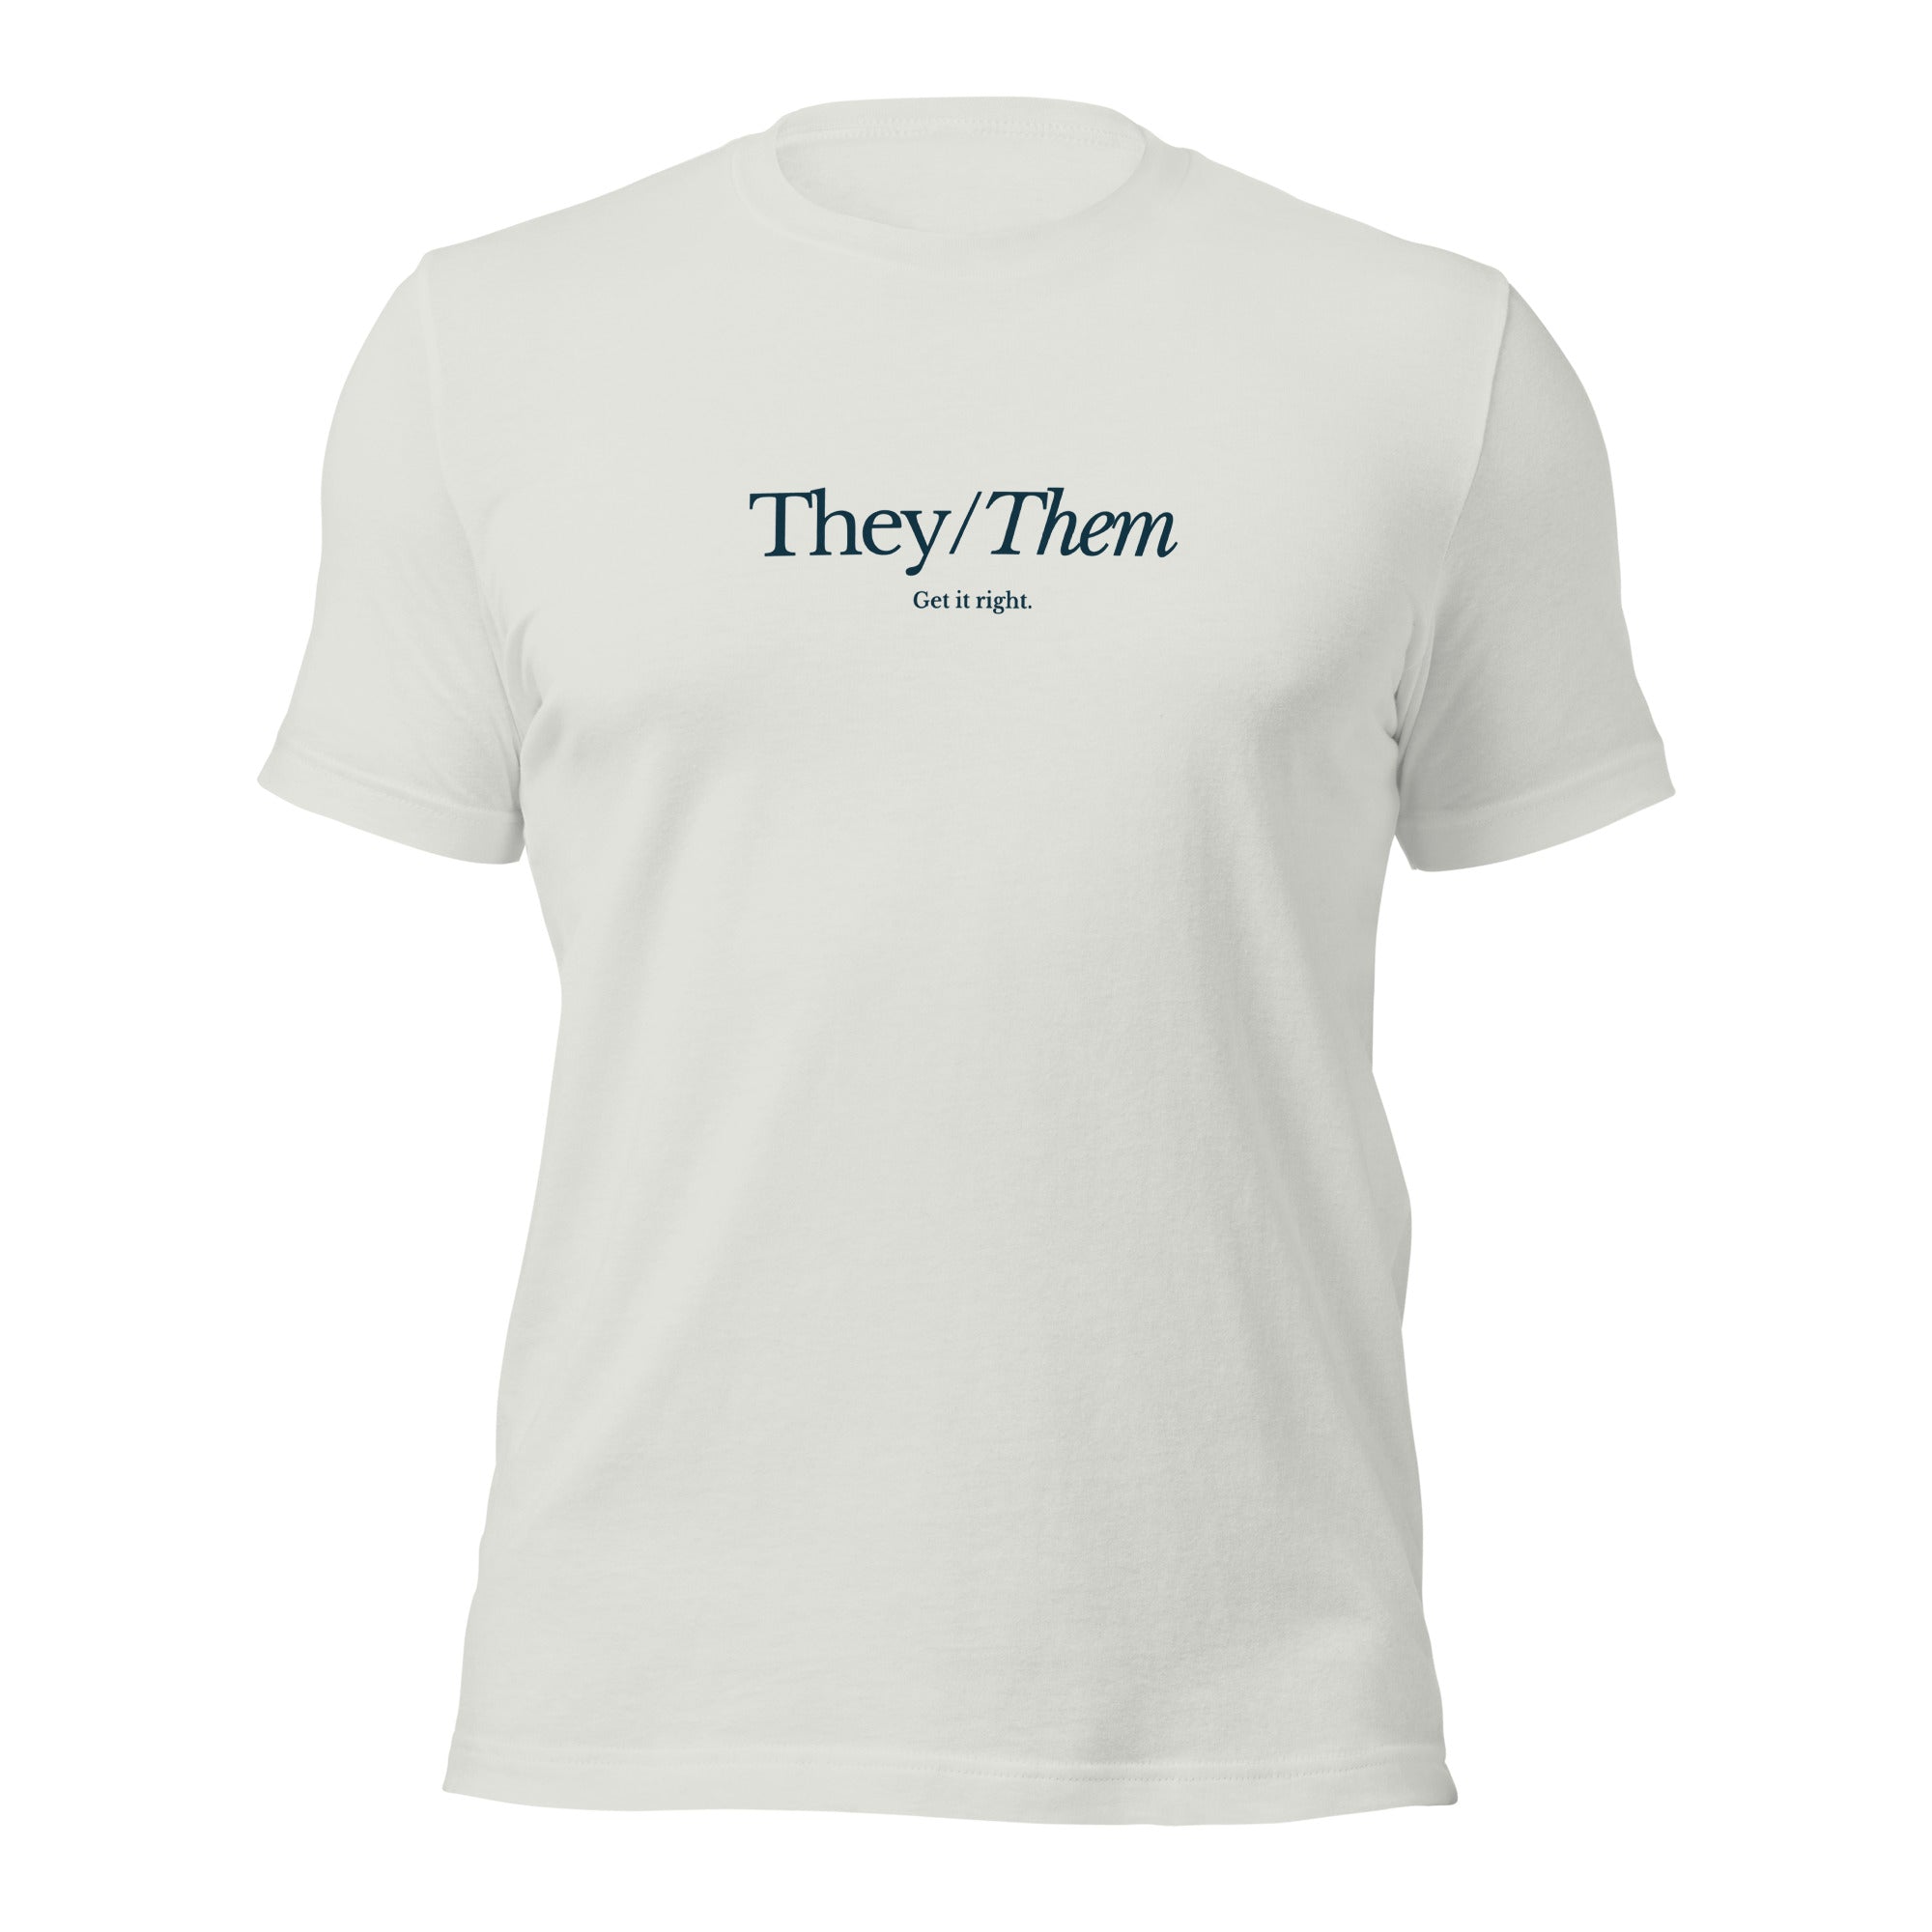 Them, Get it Right" Unisex T-Shirt